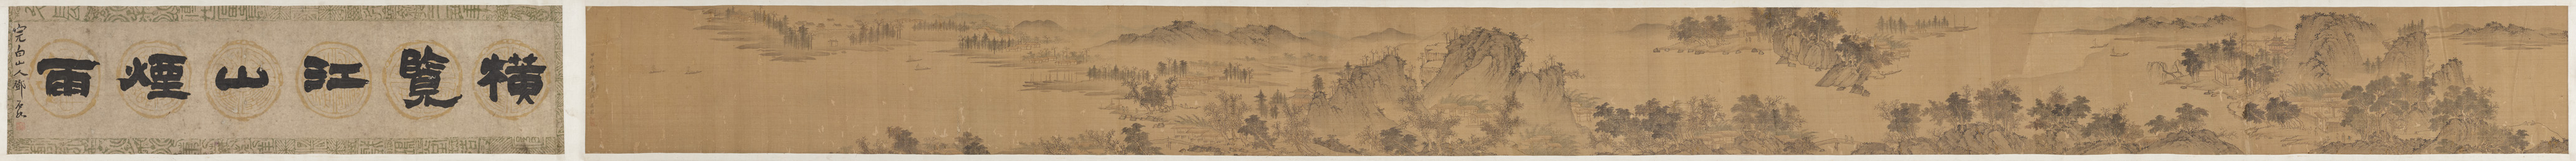 After Ju Jie . Qing dynasty - On the Yangzi (a river landscape).